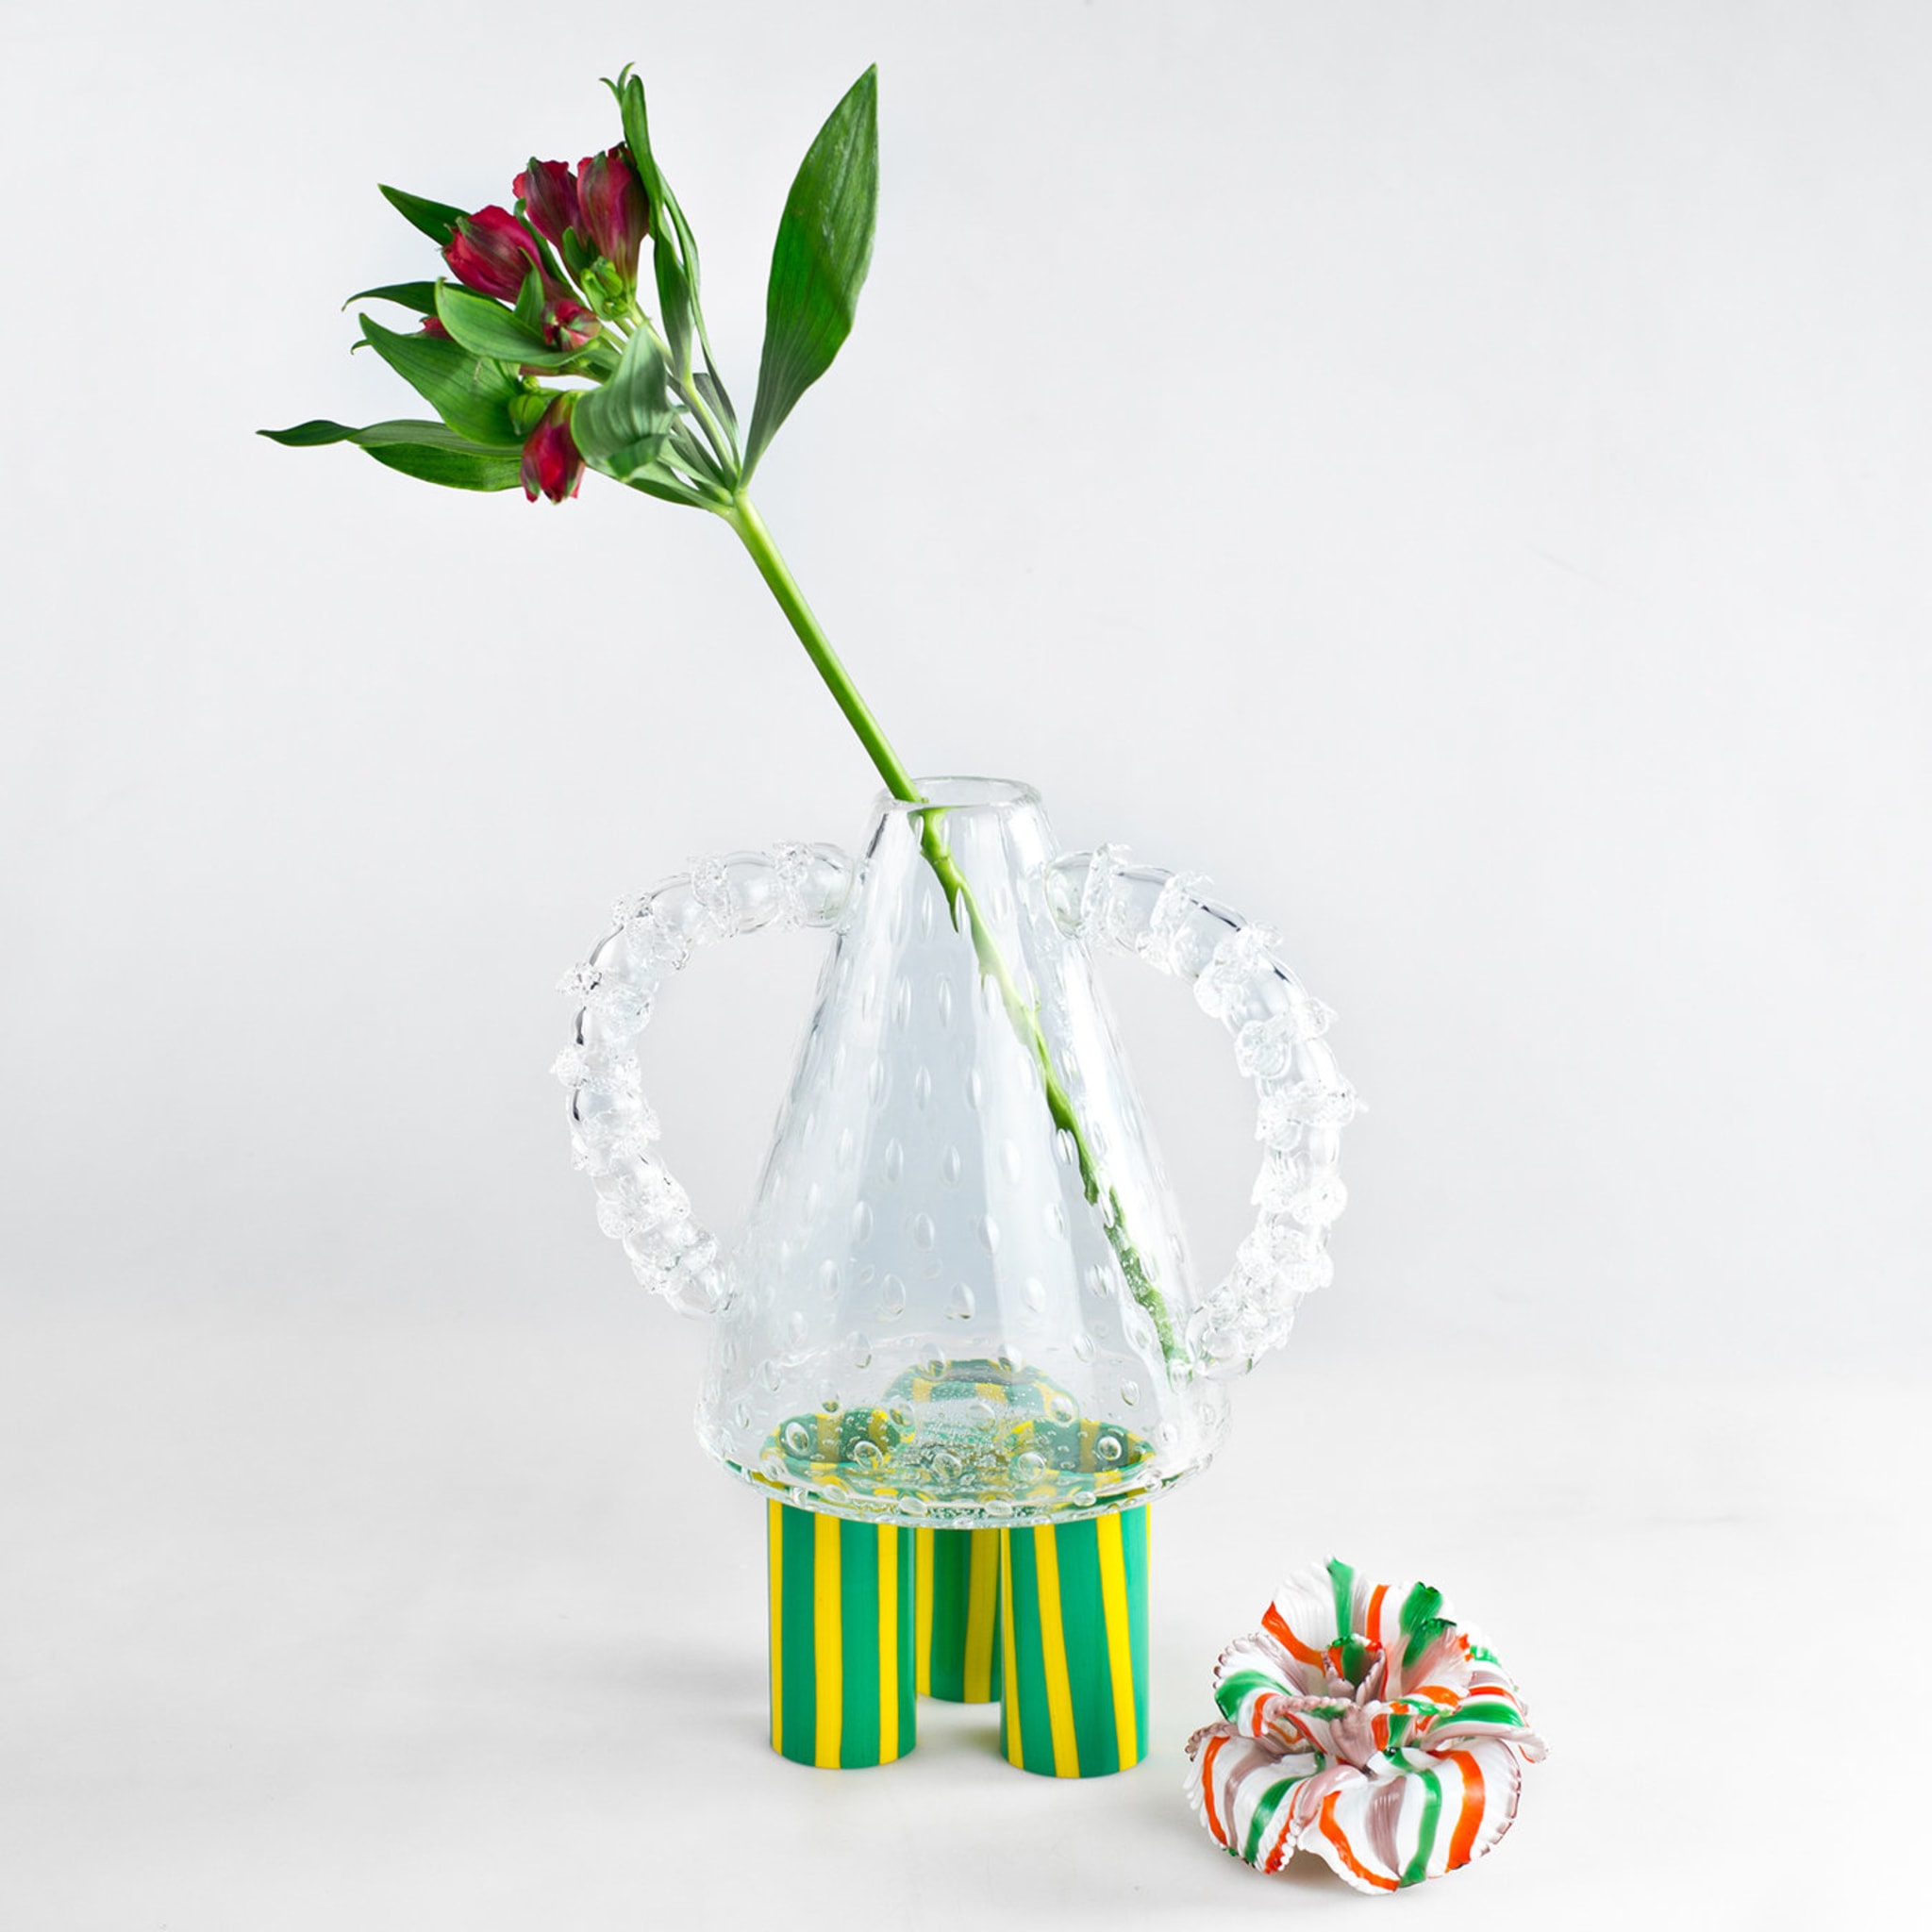 Rezzonica Venetian Glass Sculpture by Eliana Gerotto - Alternative view 1